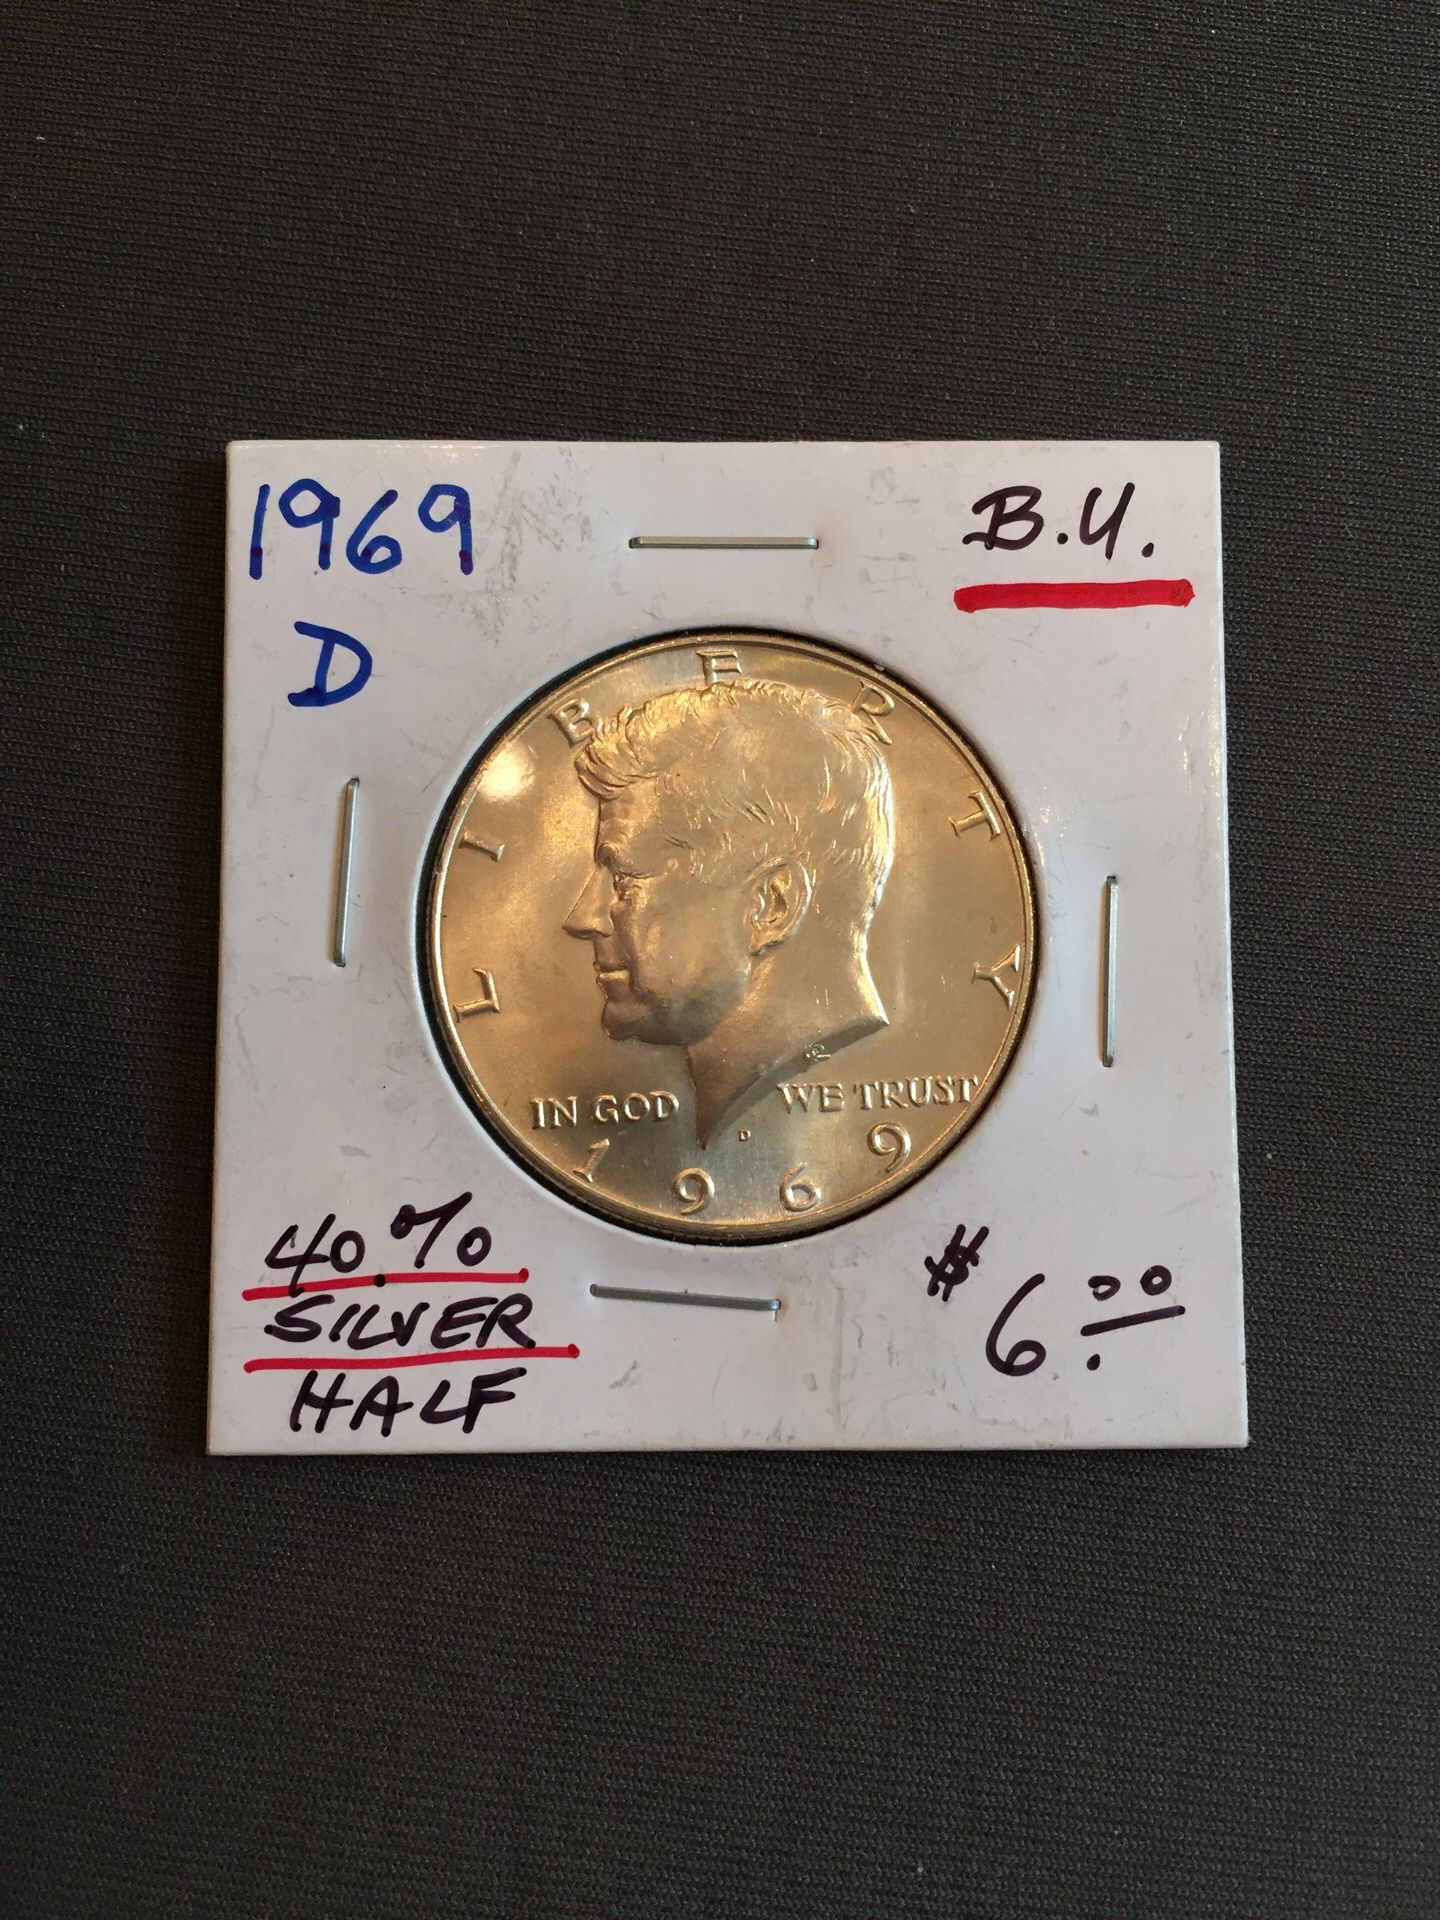 1969 D BU Silver Kennedy Half Dollar Coin